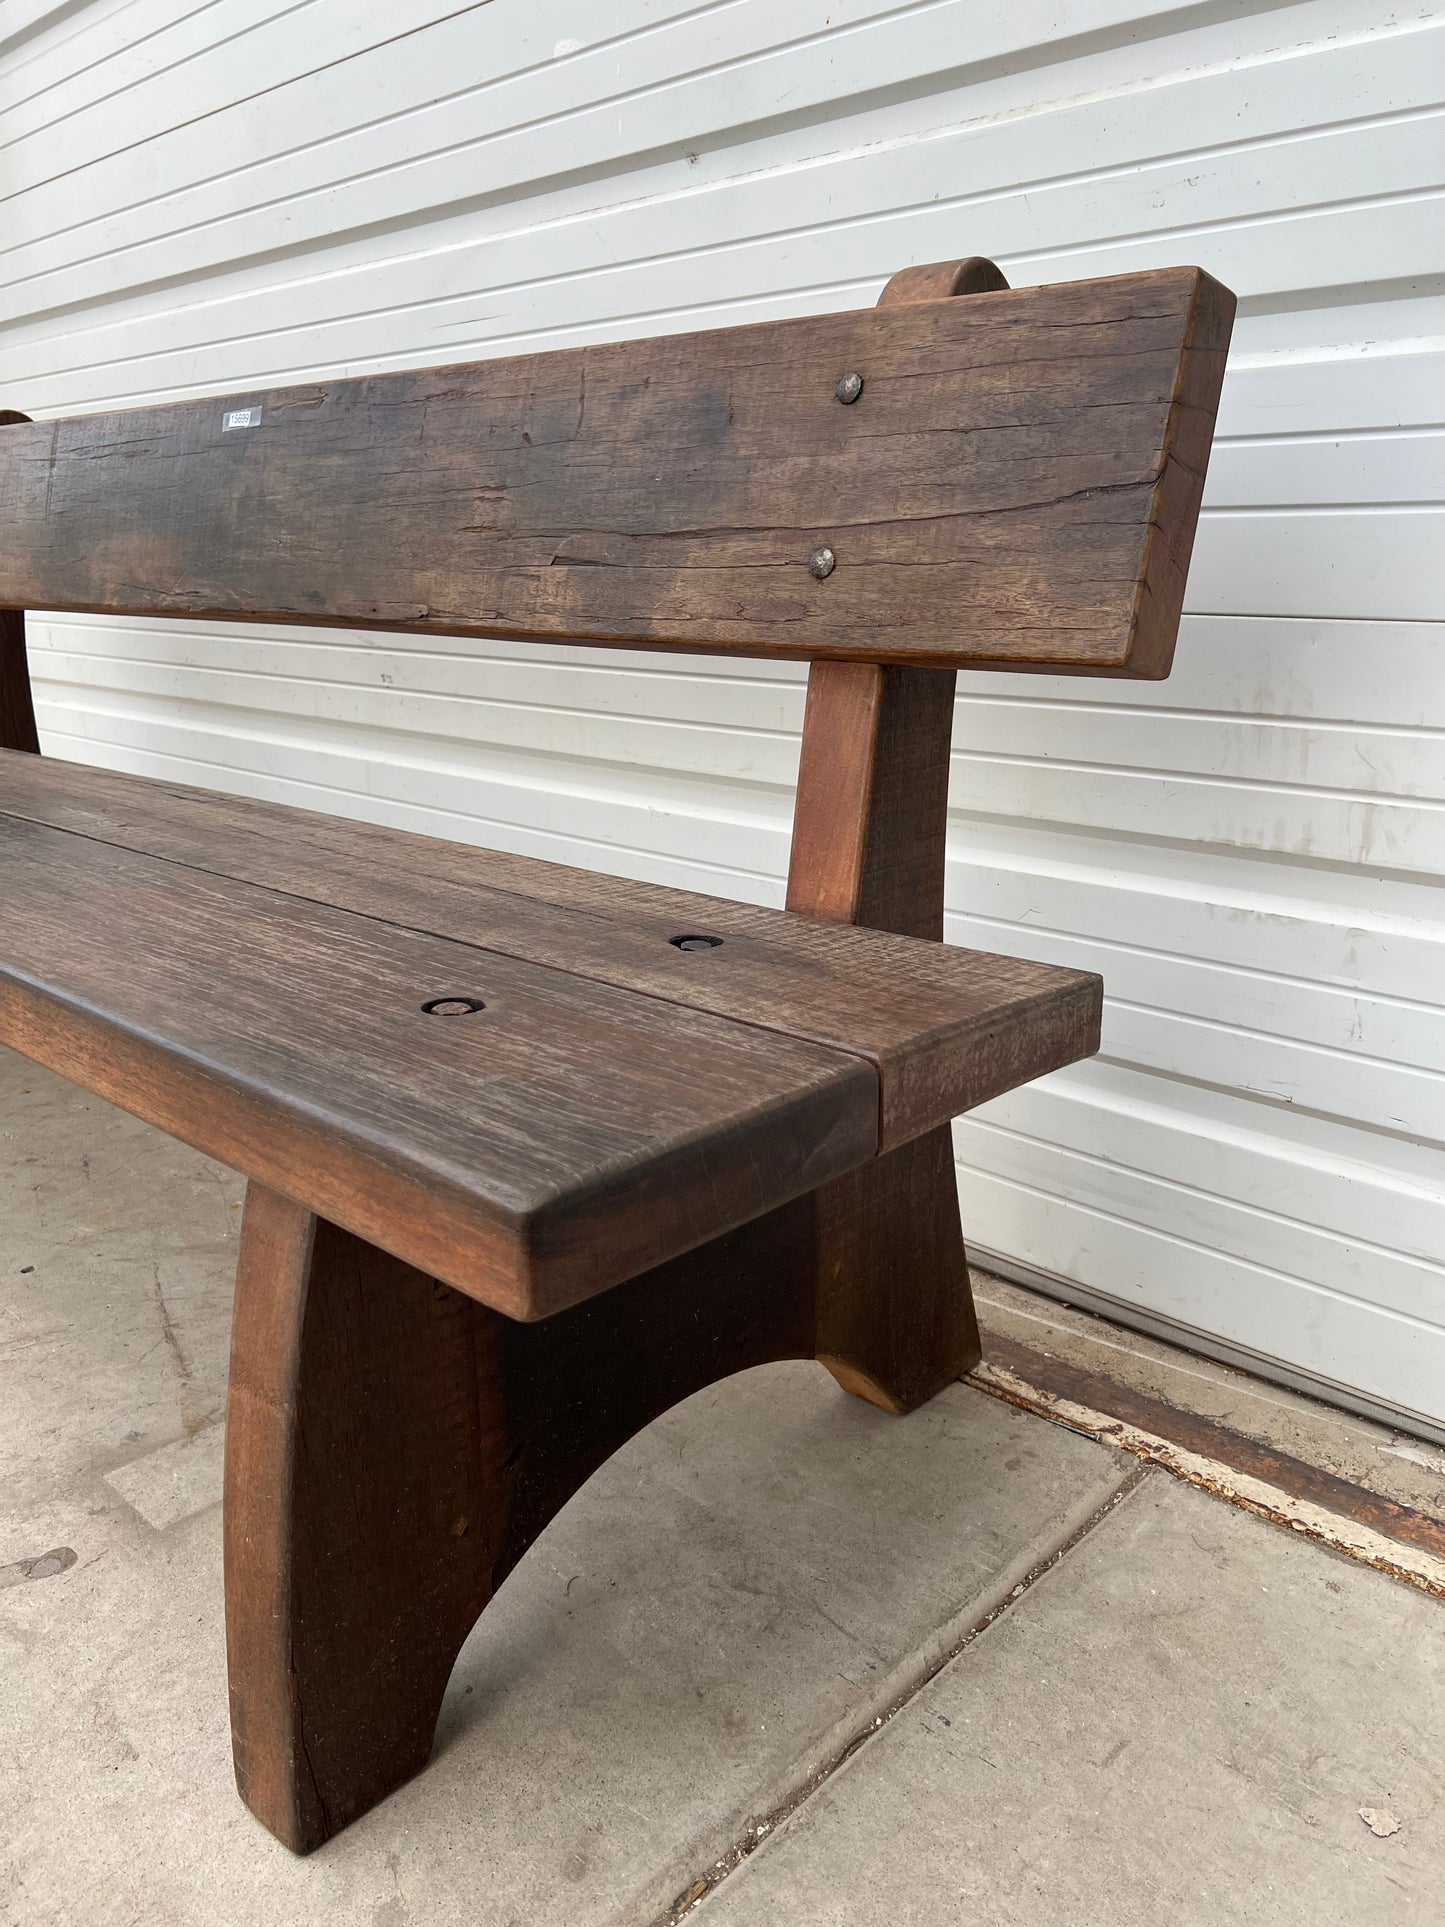 Large Wood Bench w/Back